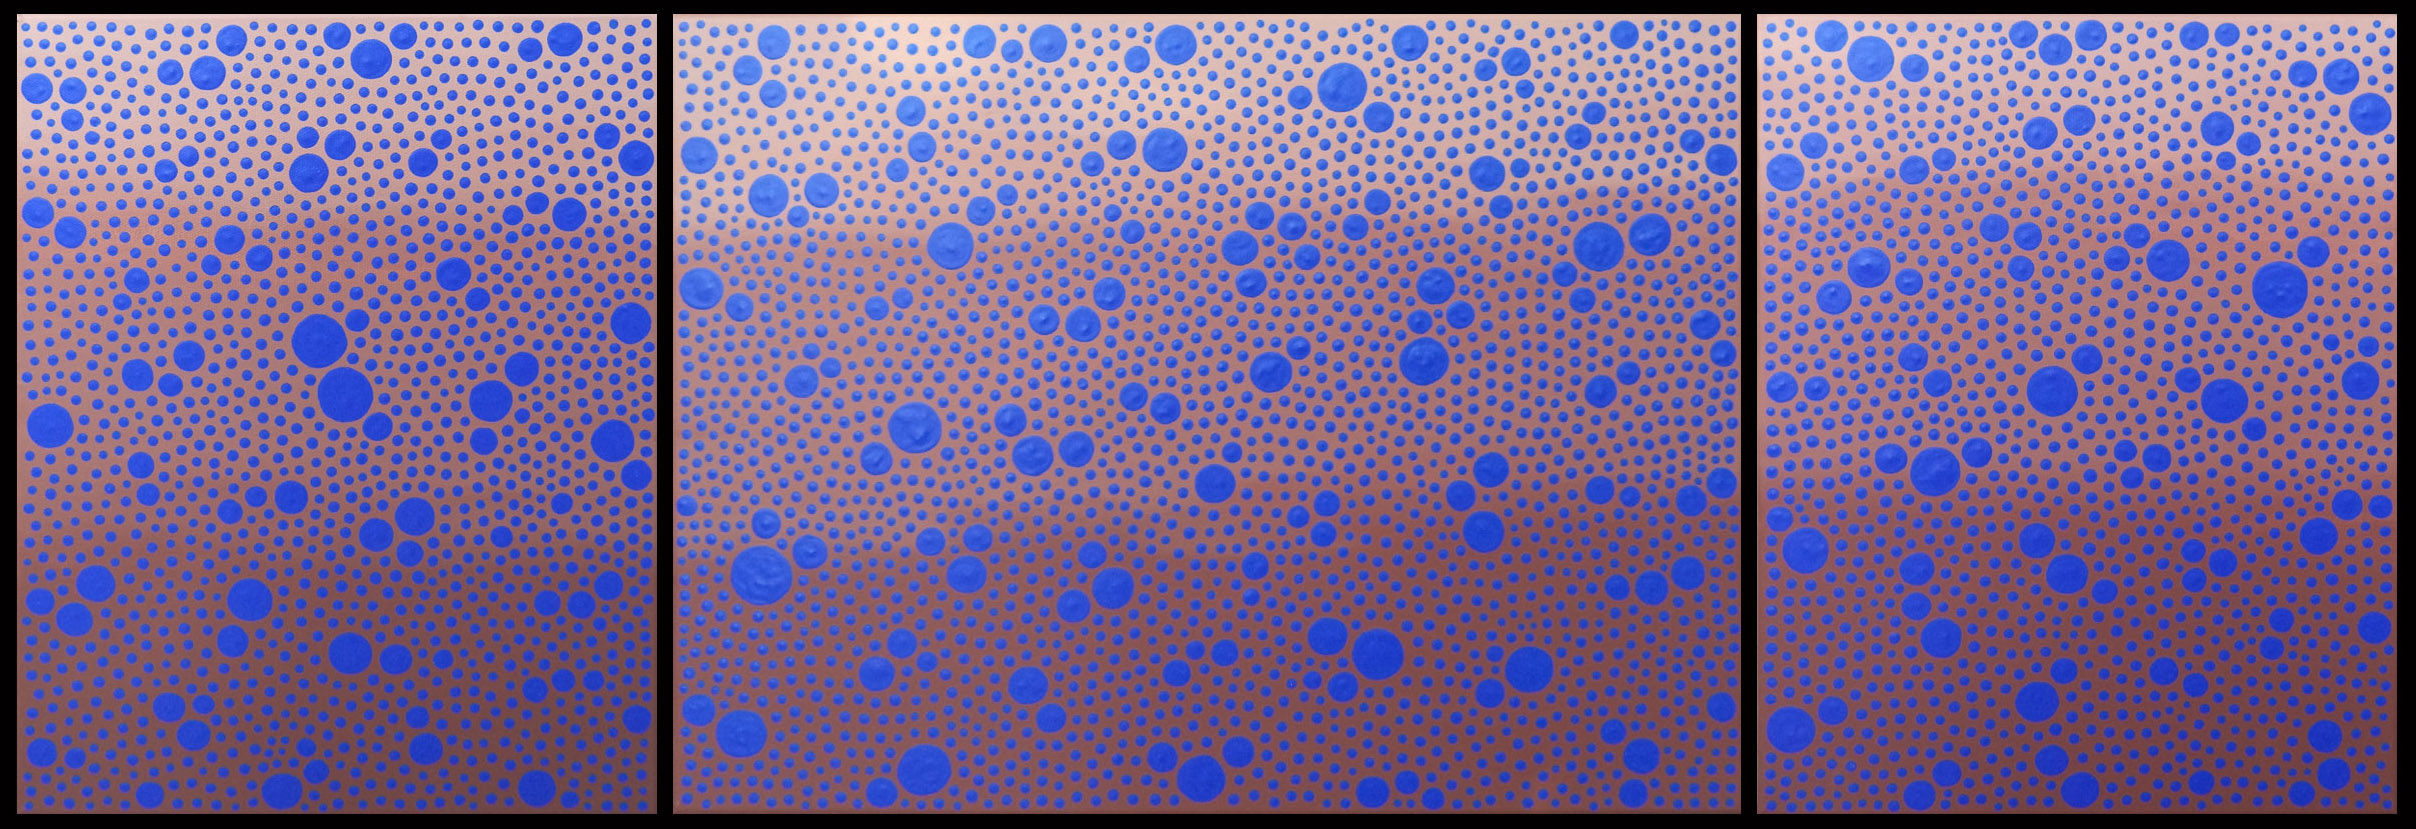 Blue Dots On Sienna Three Panel Painting